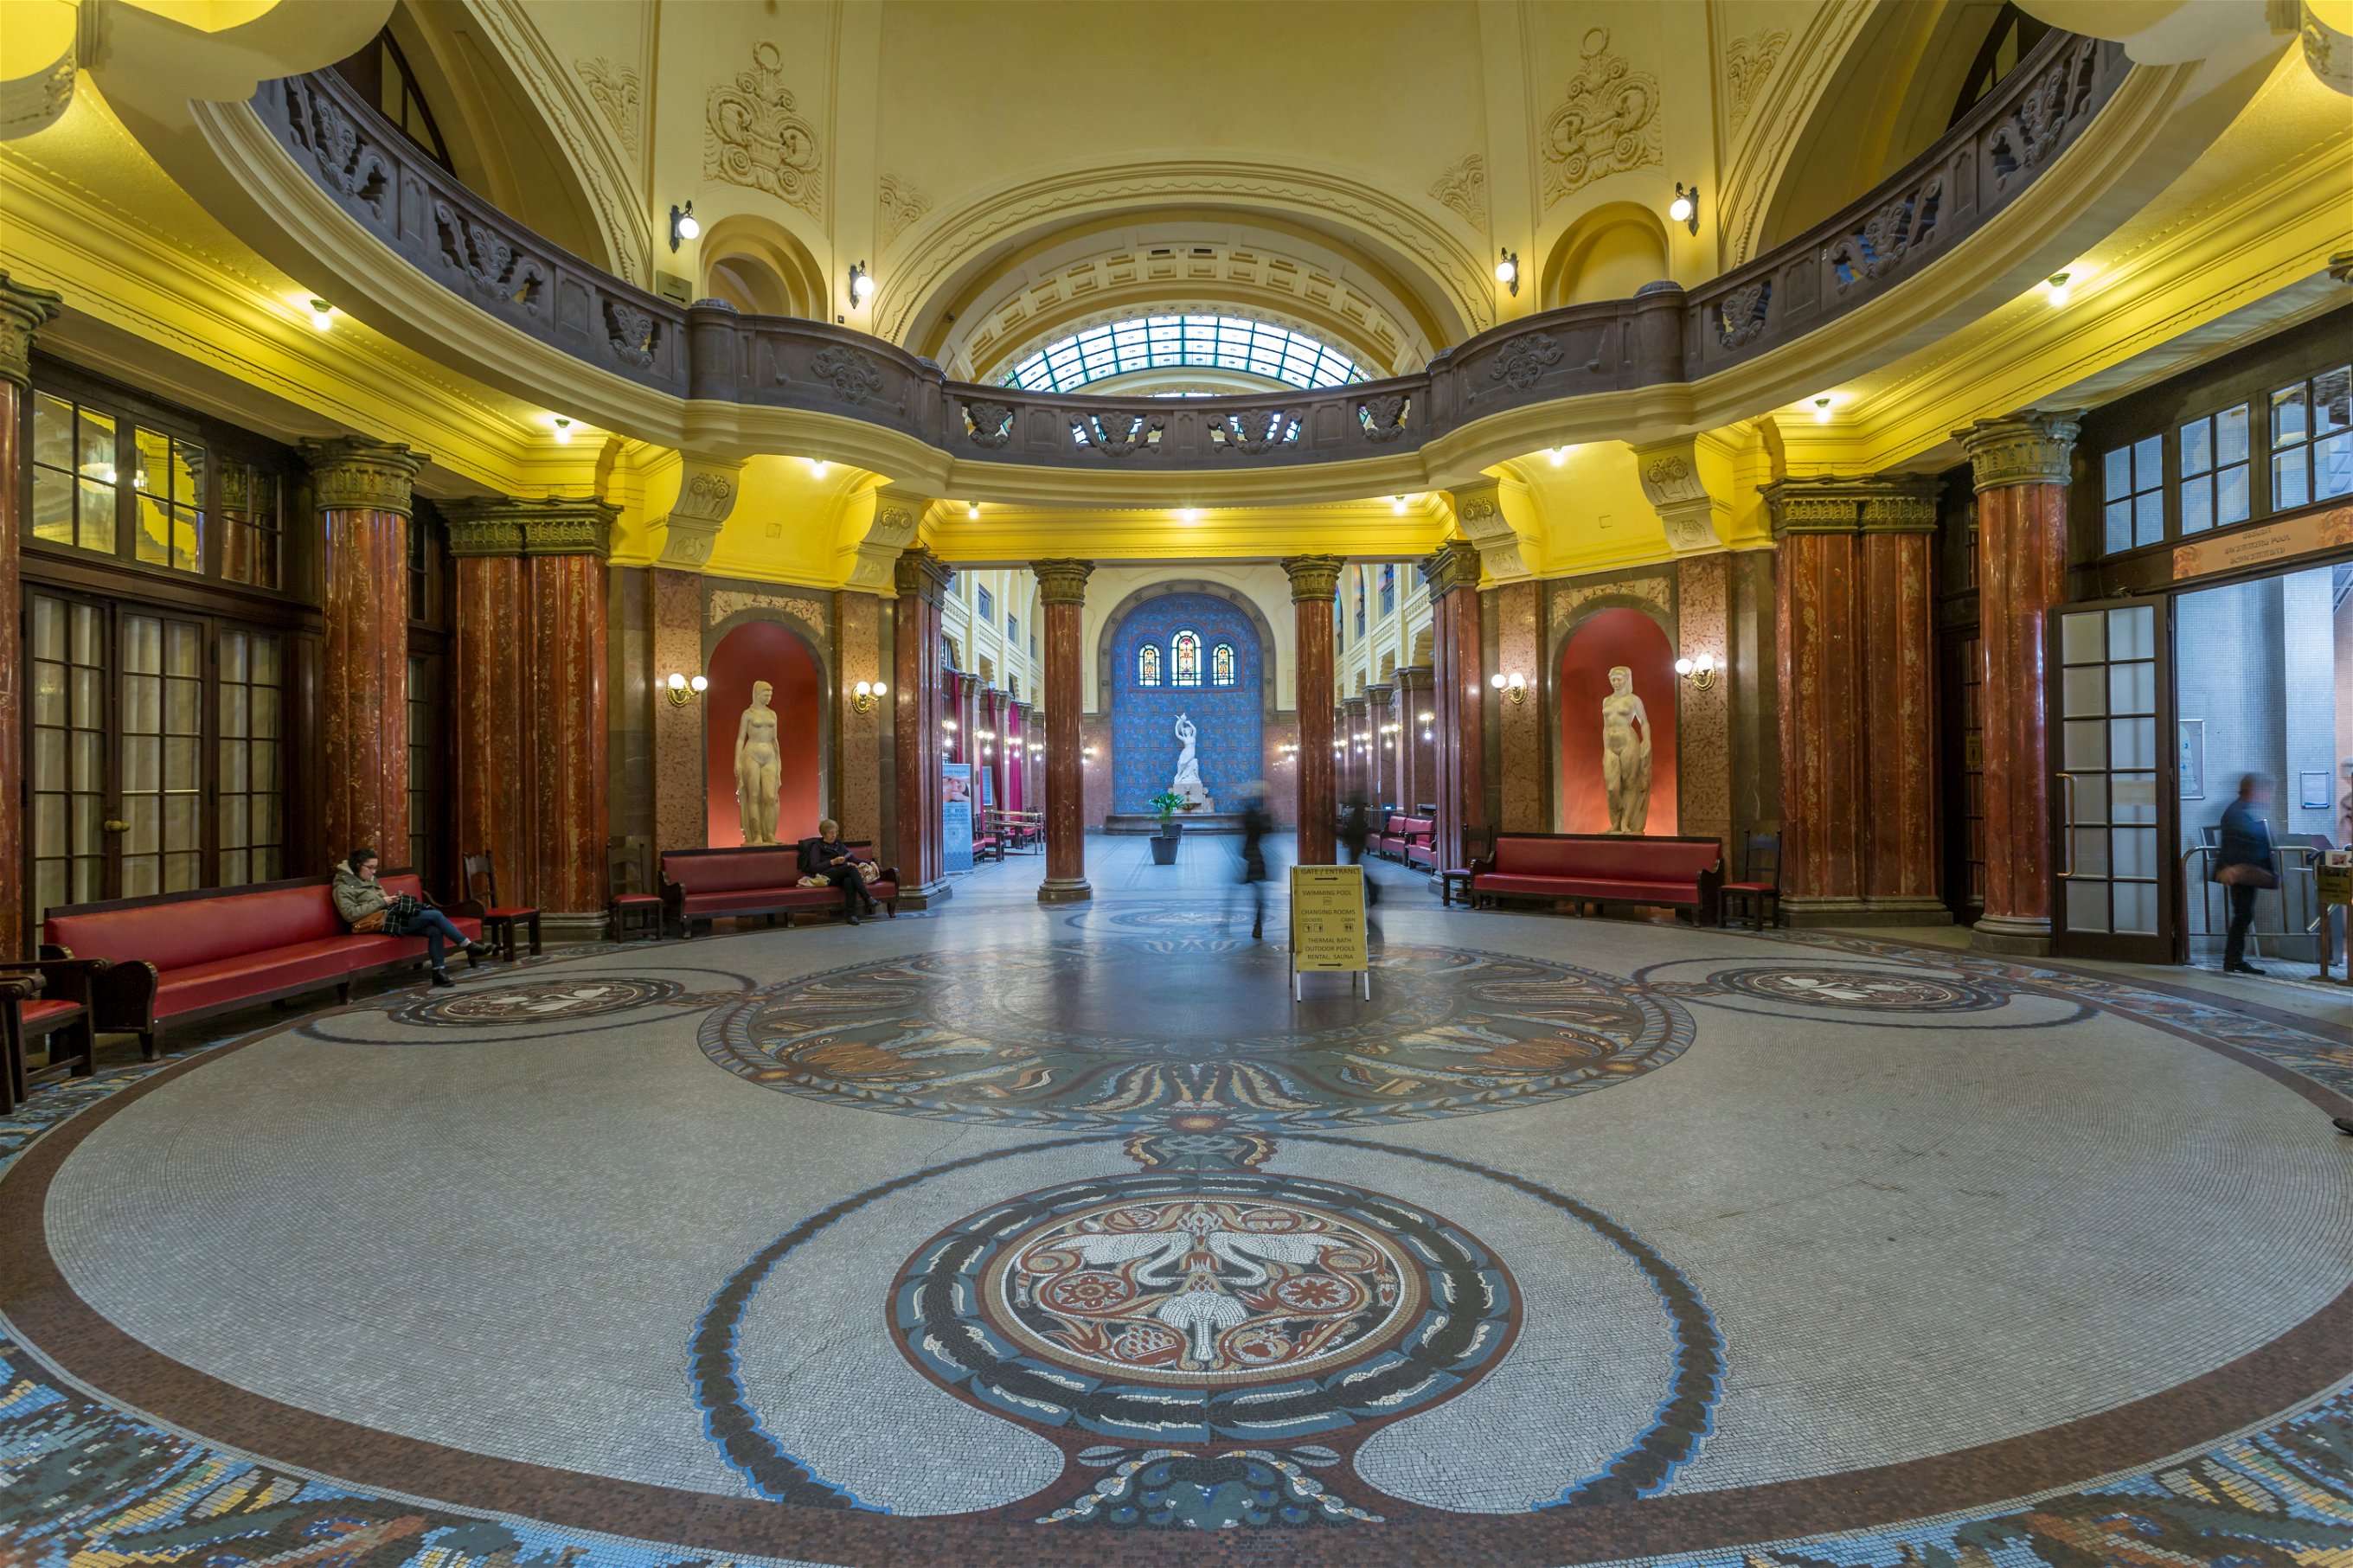 Entrance interior of Gellért Thermal Baths, Budapest